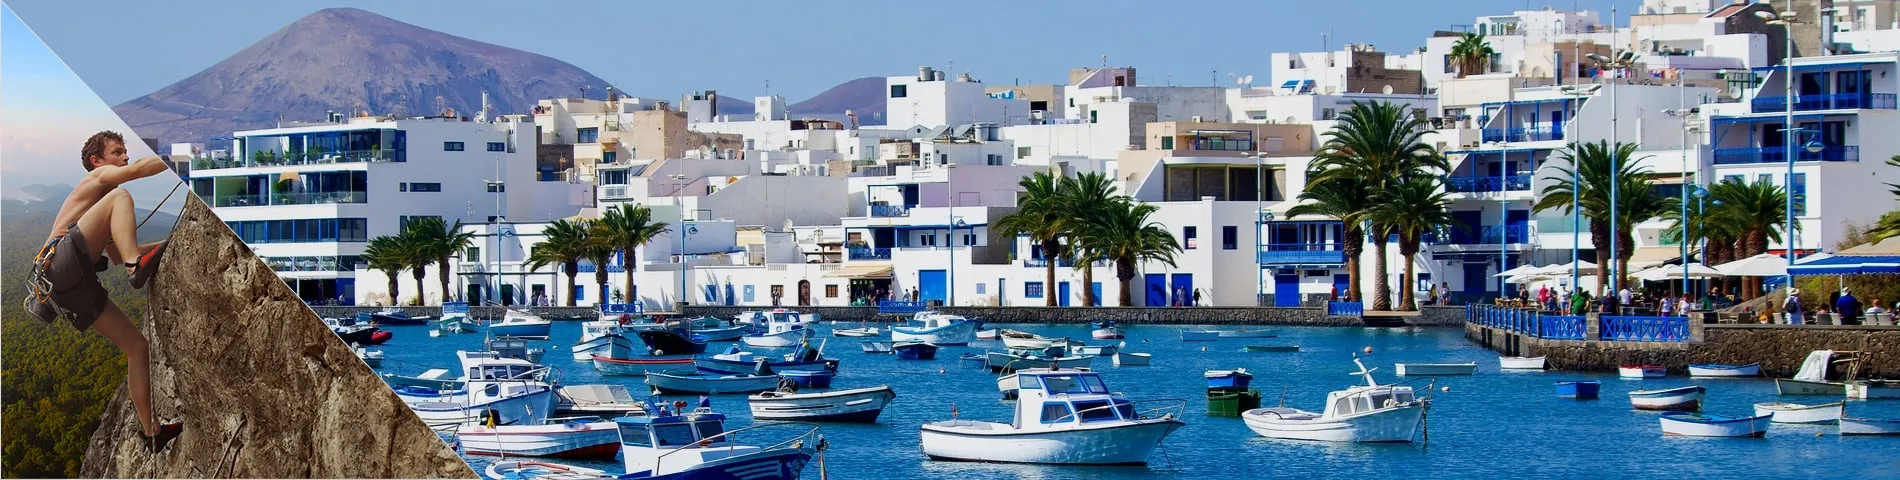 Lanzarote - Hiszpański i wspinaczka